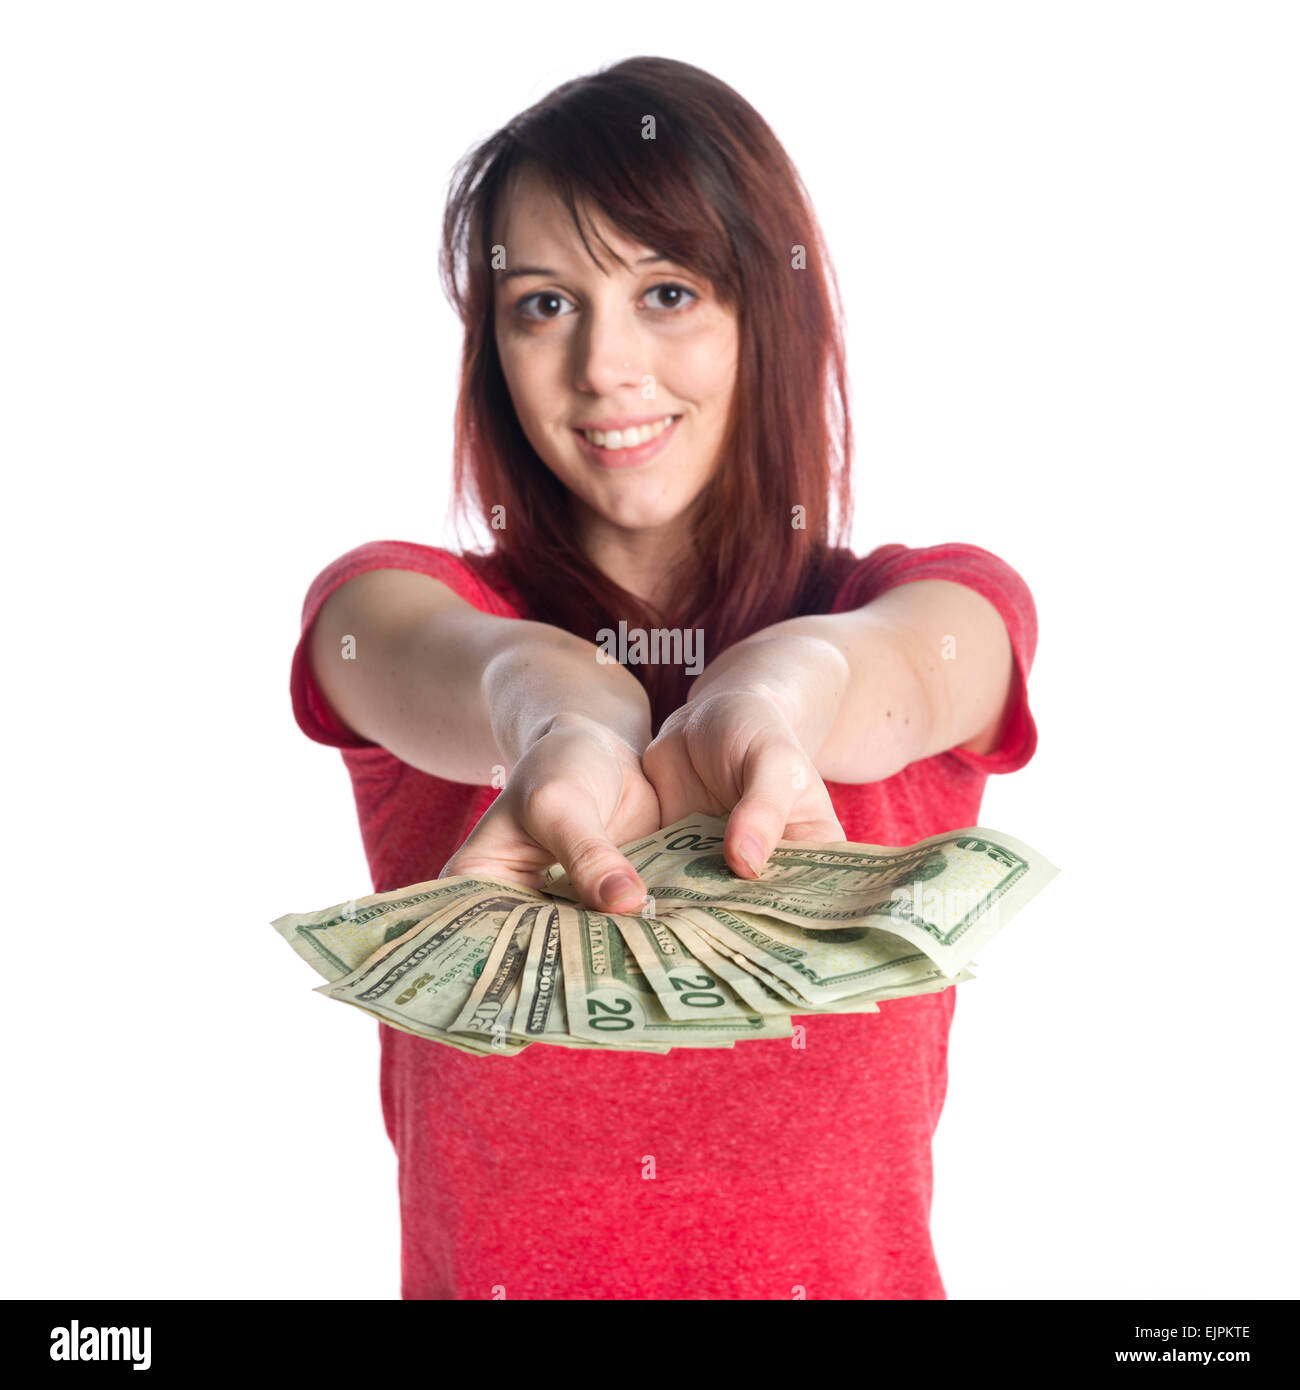 Smiling Woman Offering a Fan of 20 US Dollar Bills Stock Photo